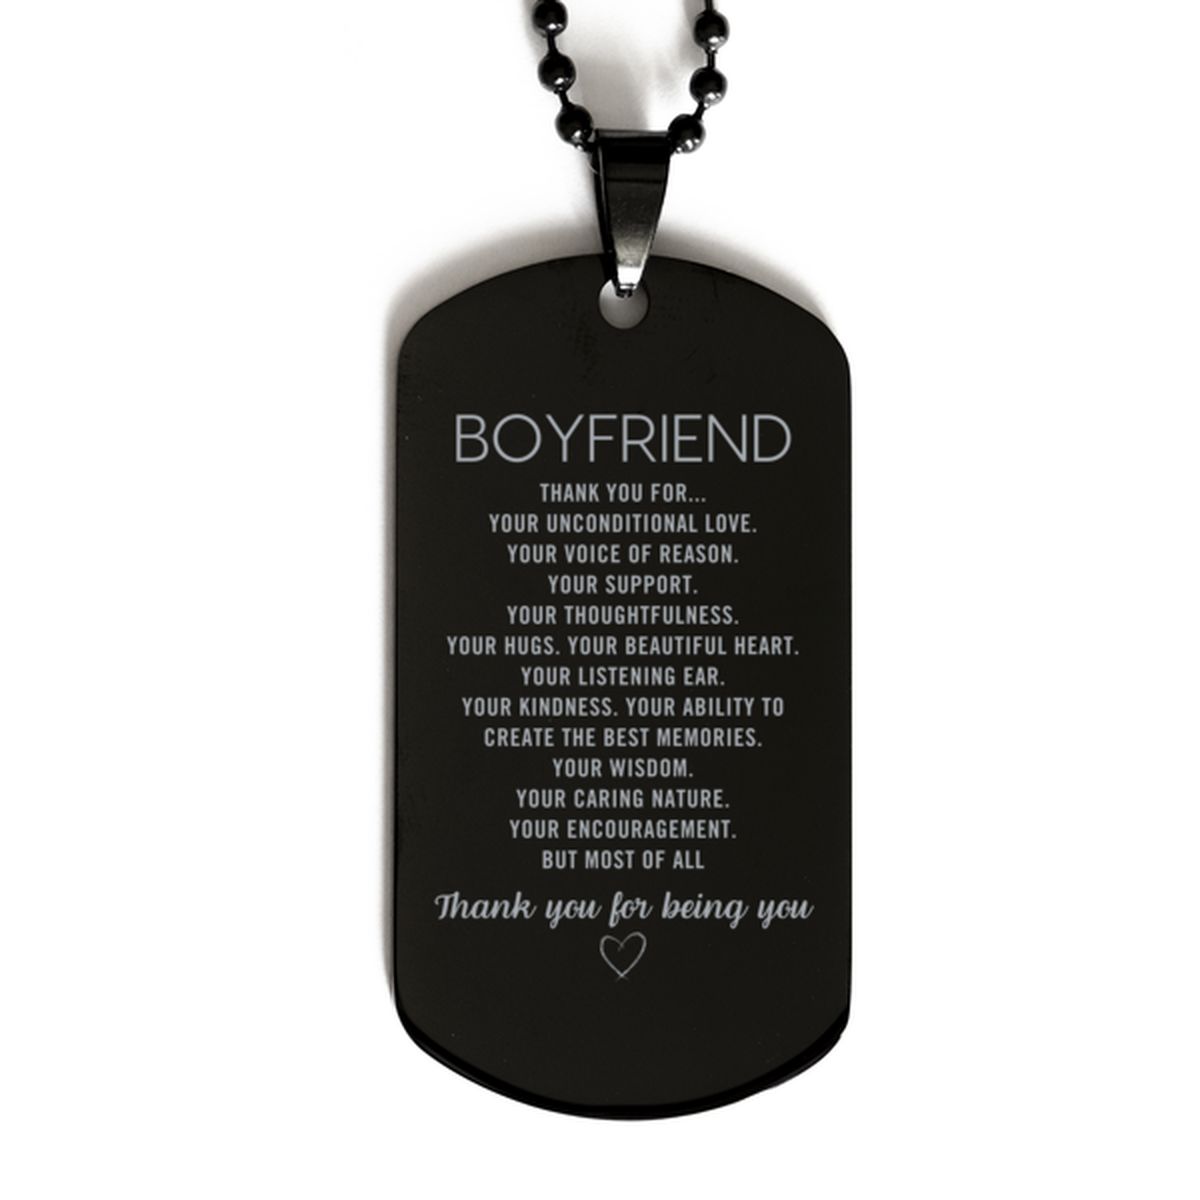 Boyfriend Black Dog Tag Custom, Engraved Gifts For Boyfriend Christmas Graduation Birthday Gifts for Men Women Boyfriend Thank you for Your unconditional love